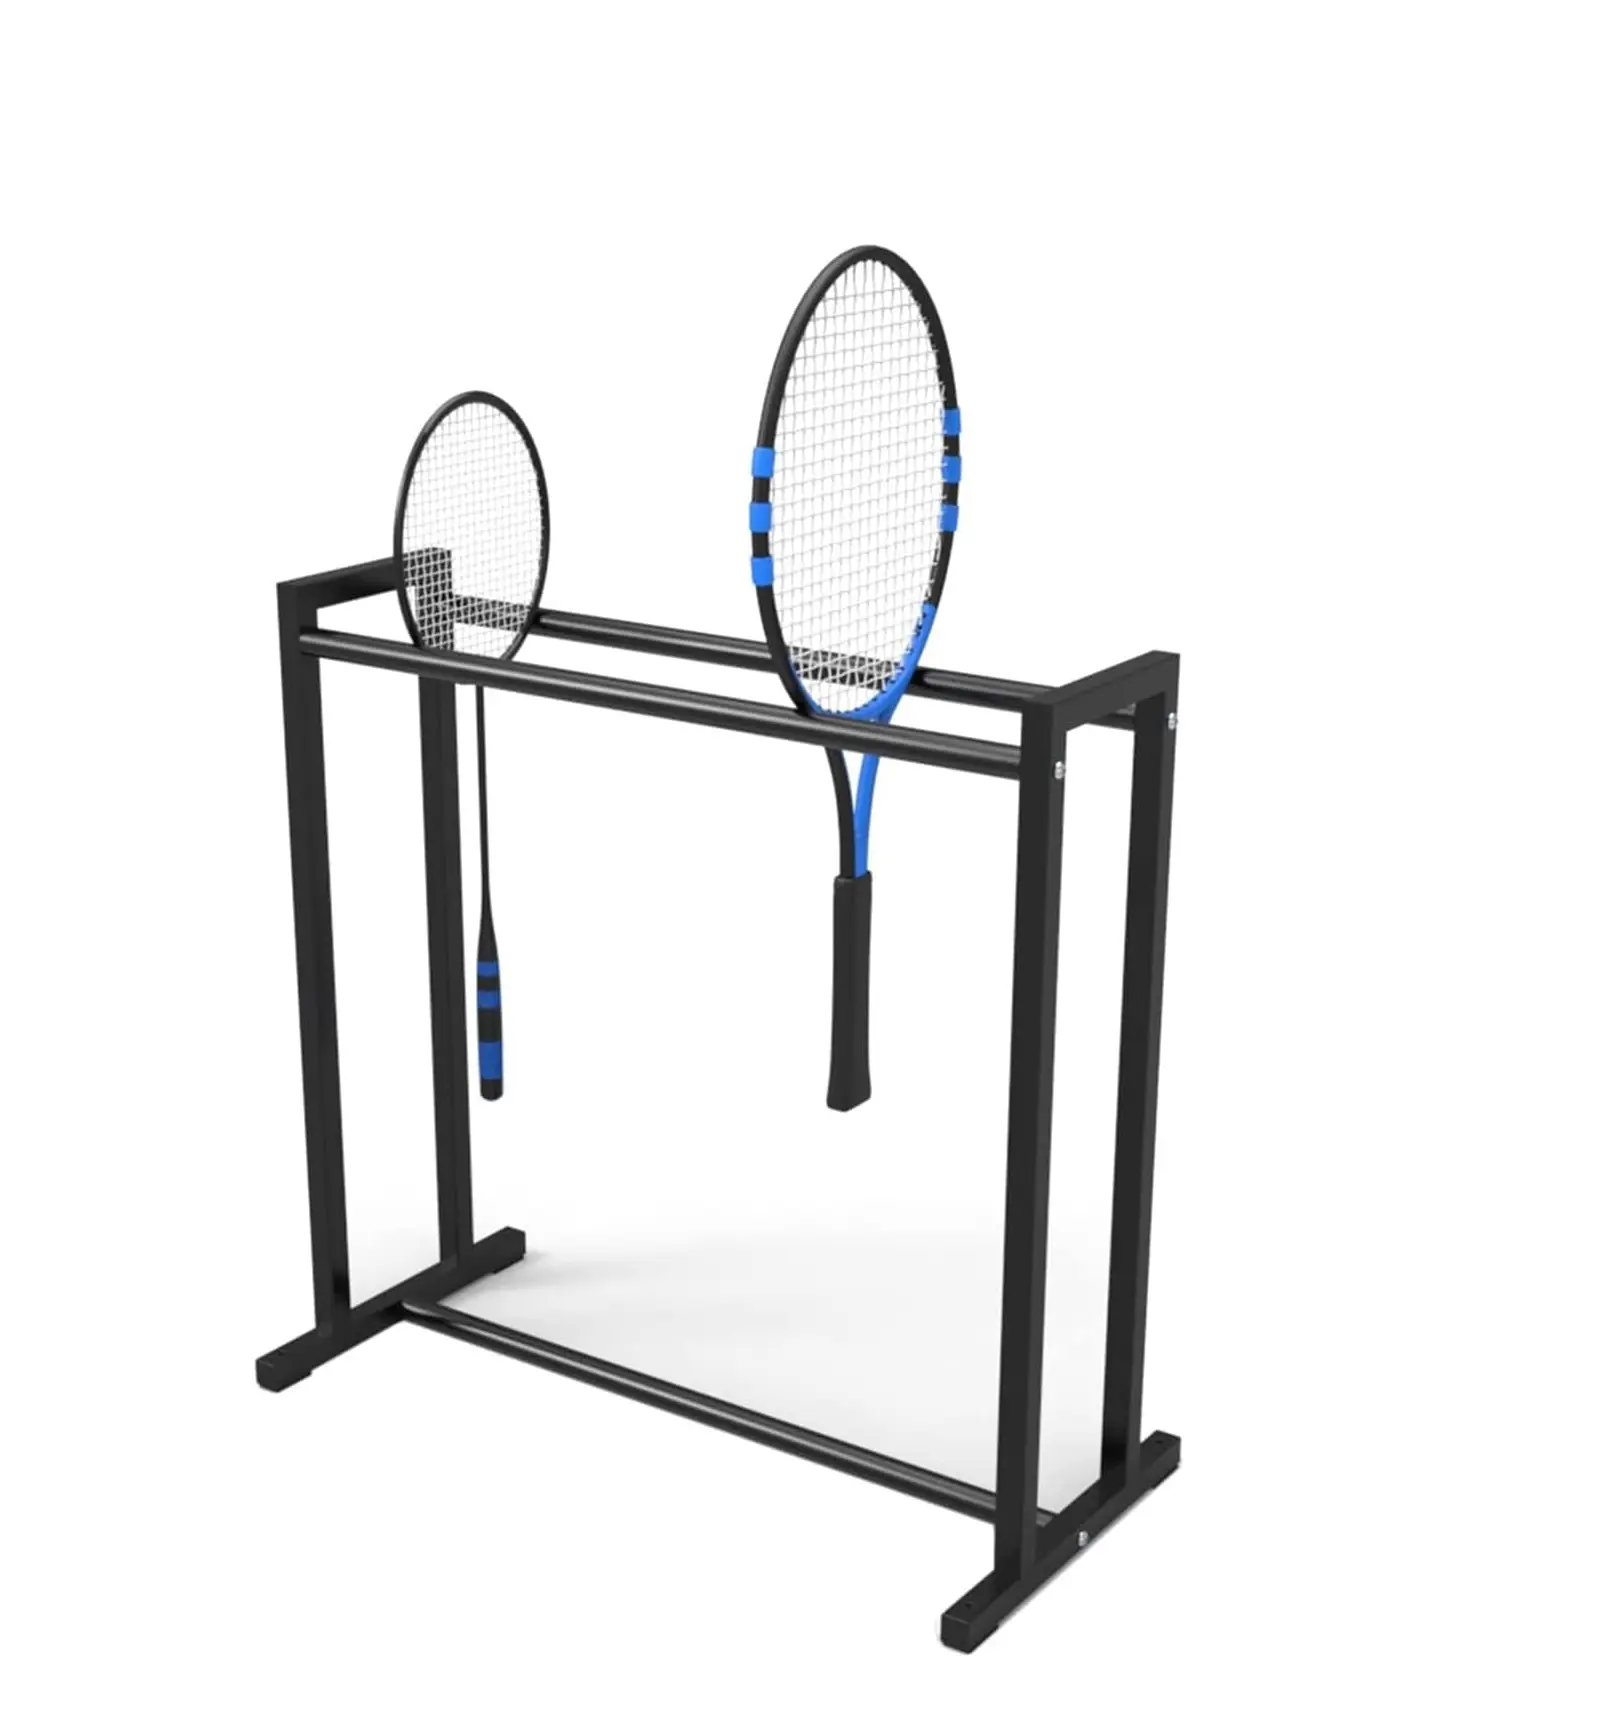 Badminton Raquete Display Stand Carrinho removível para raquete tênis e raquete Badminton